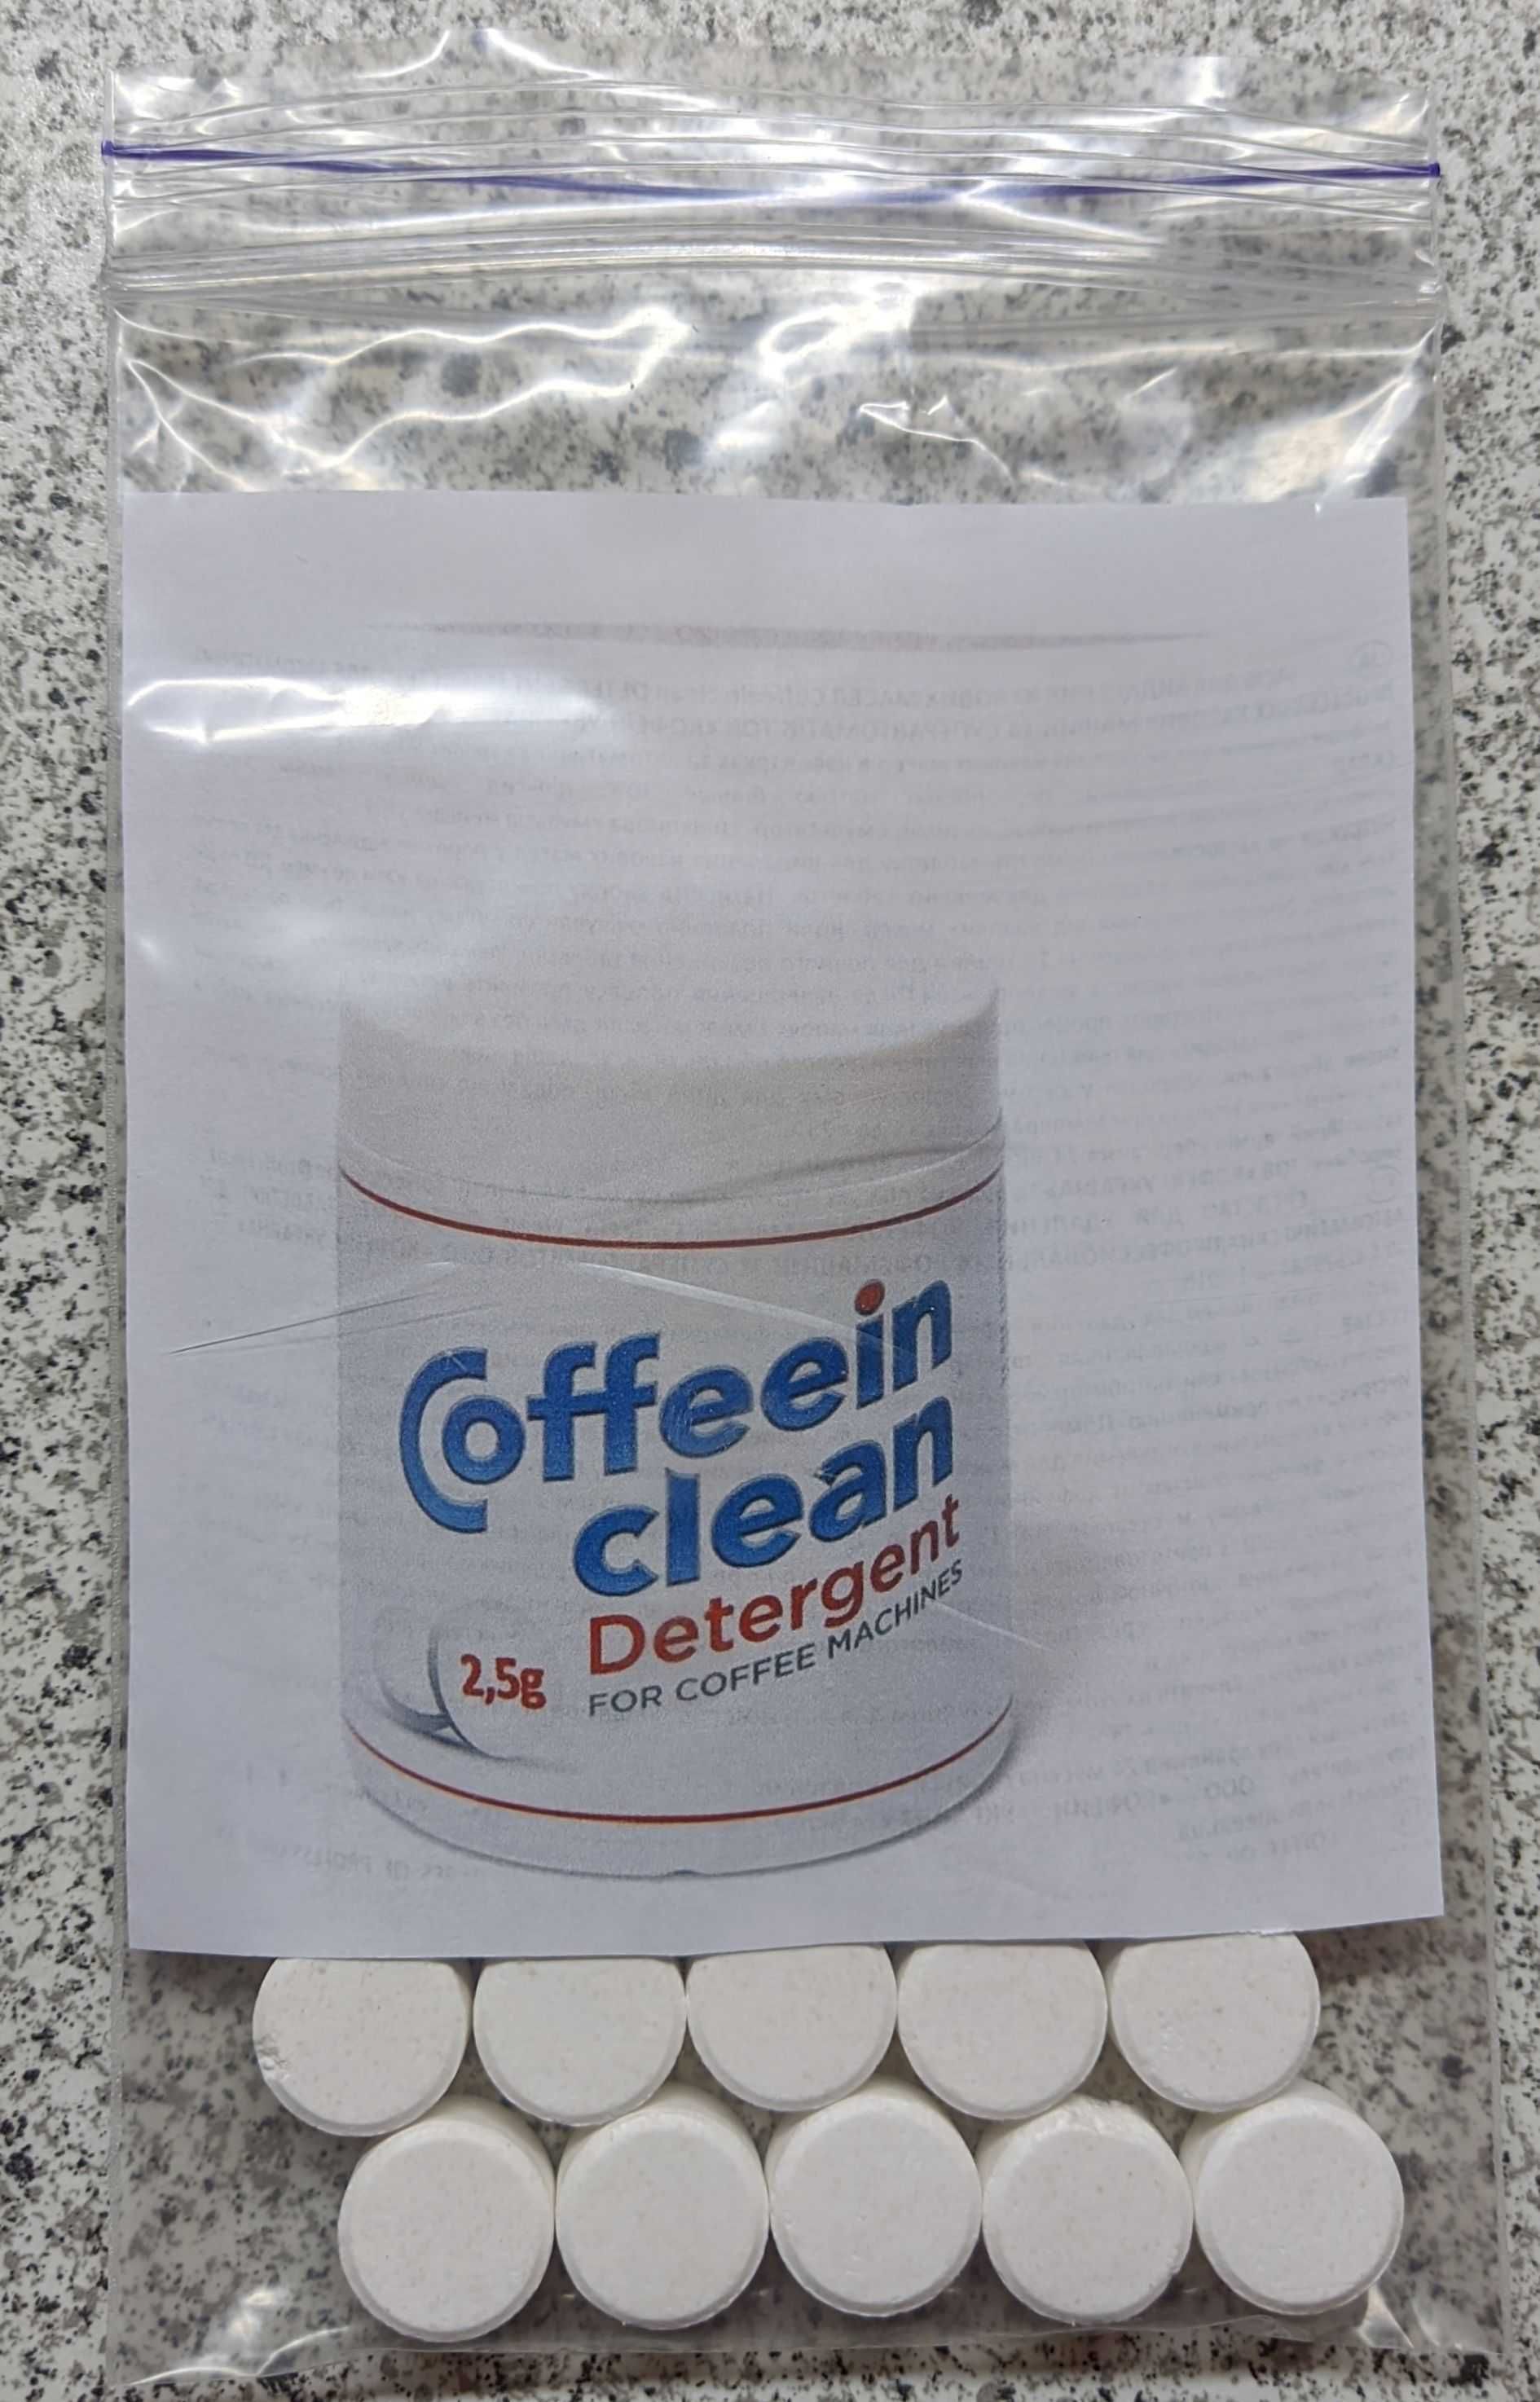 Таблетки для чистки кофемашин. "Coffeein clean" 2,5 g  10 таб